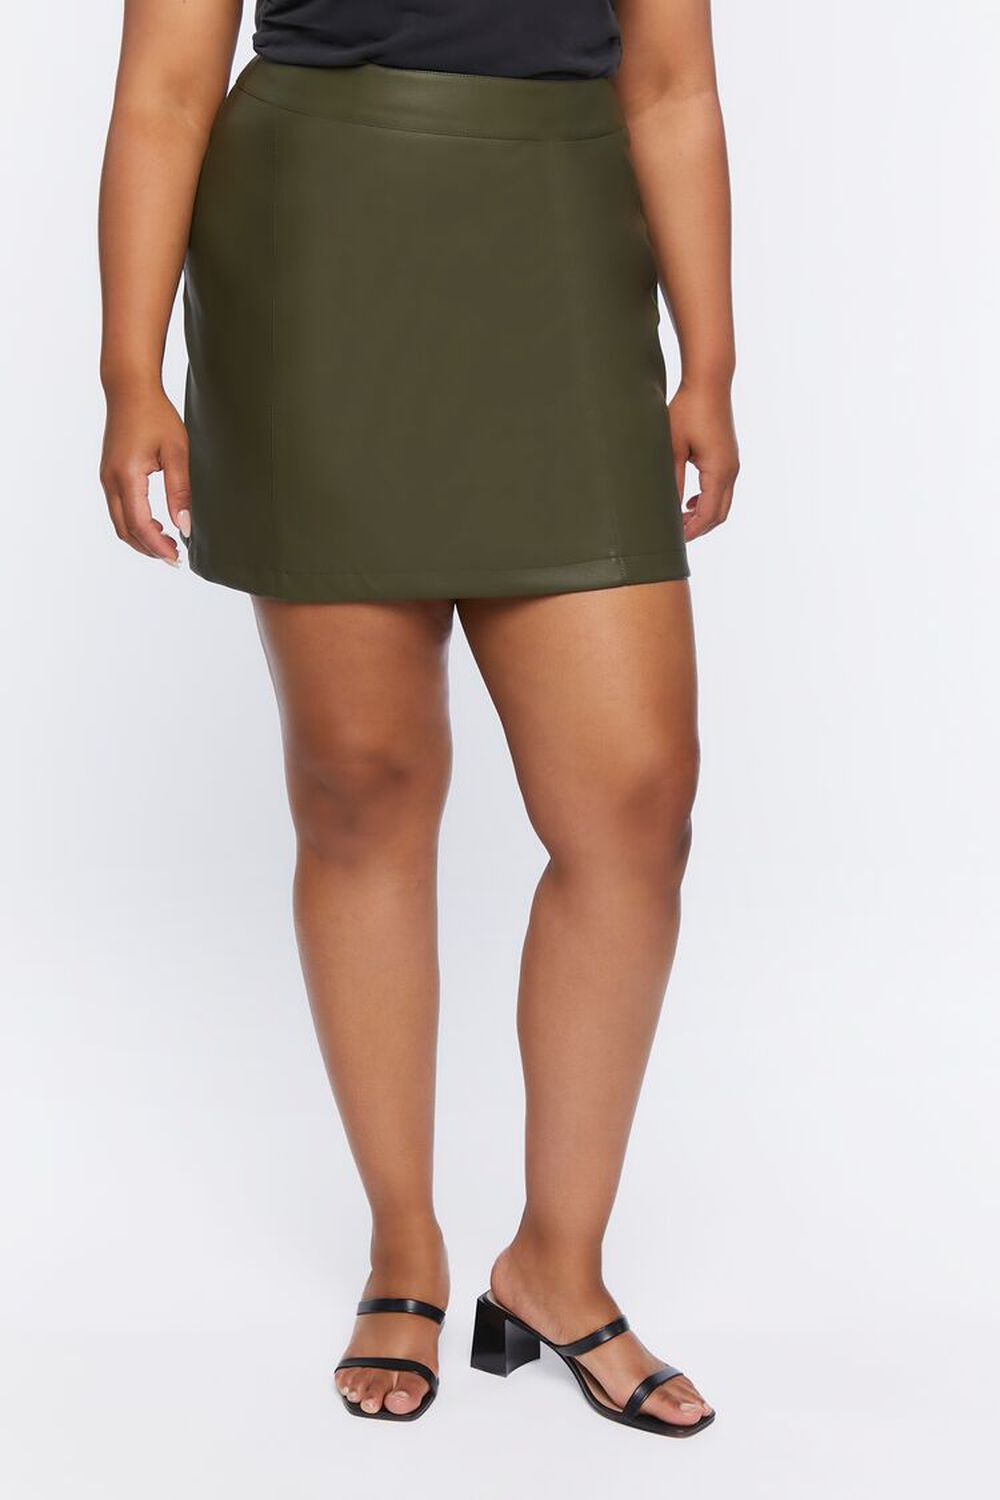 CYPRESS  Plus Size Faux Leather Mini Skirt, image 2